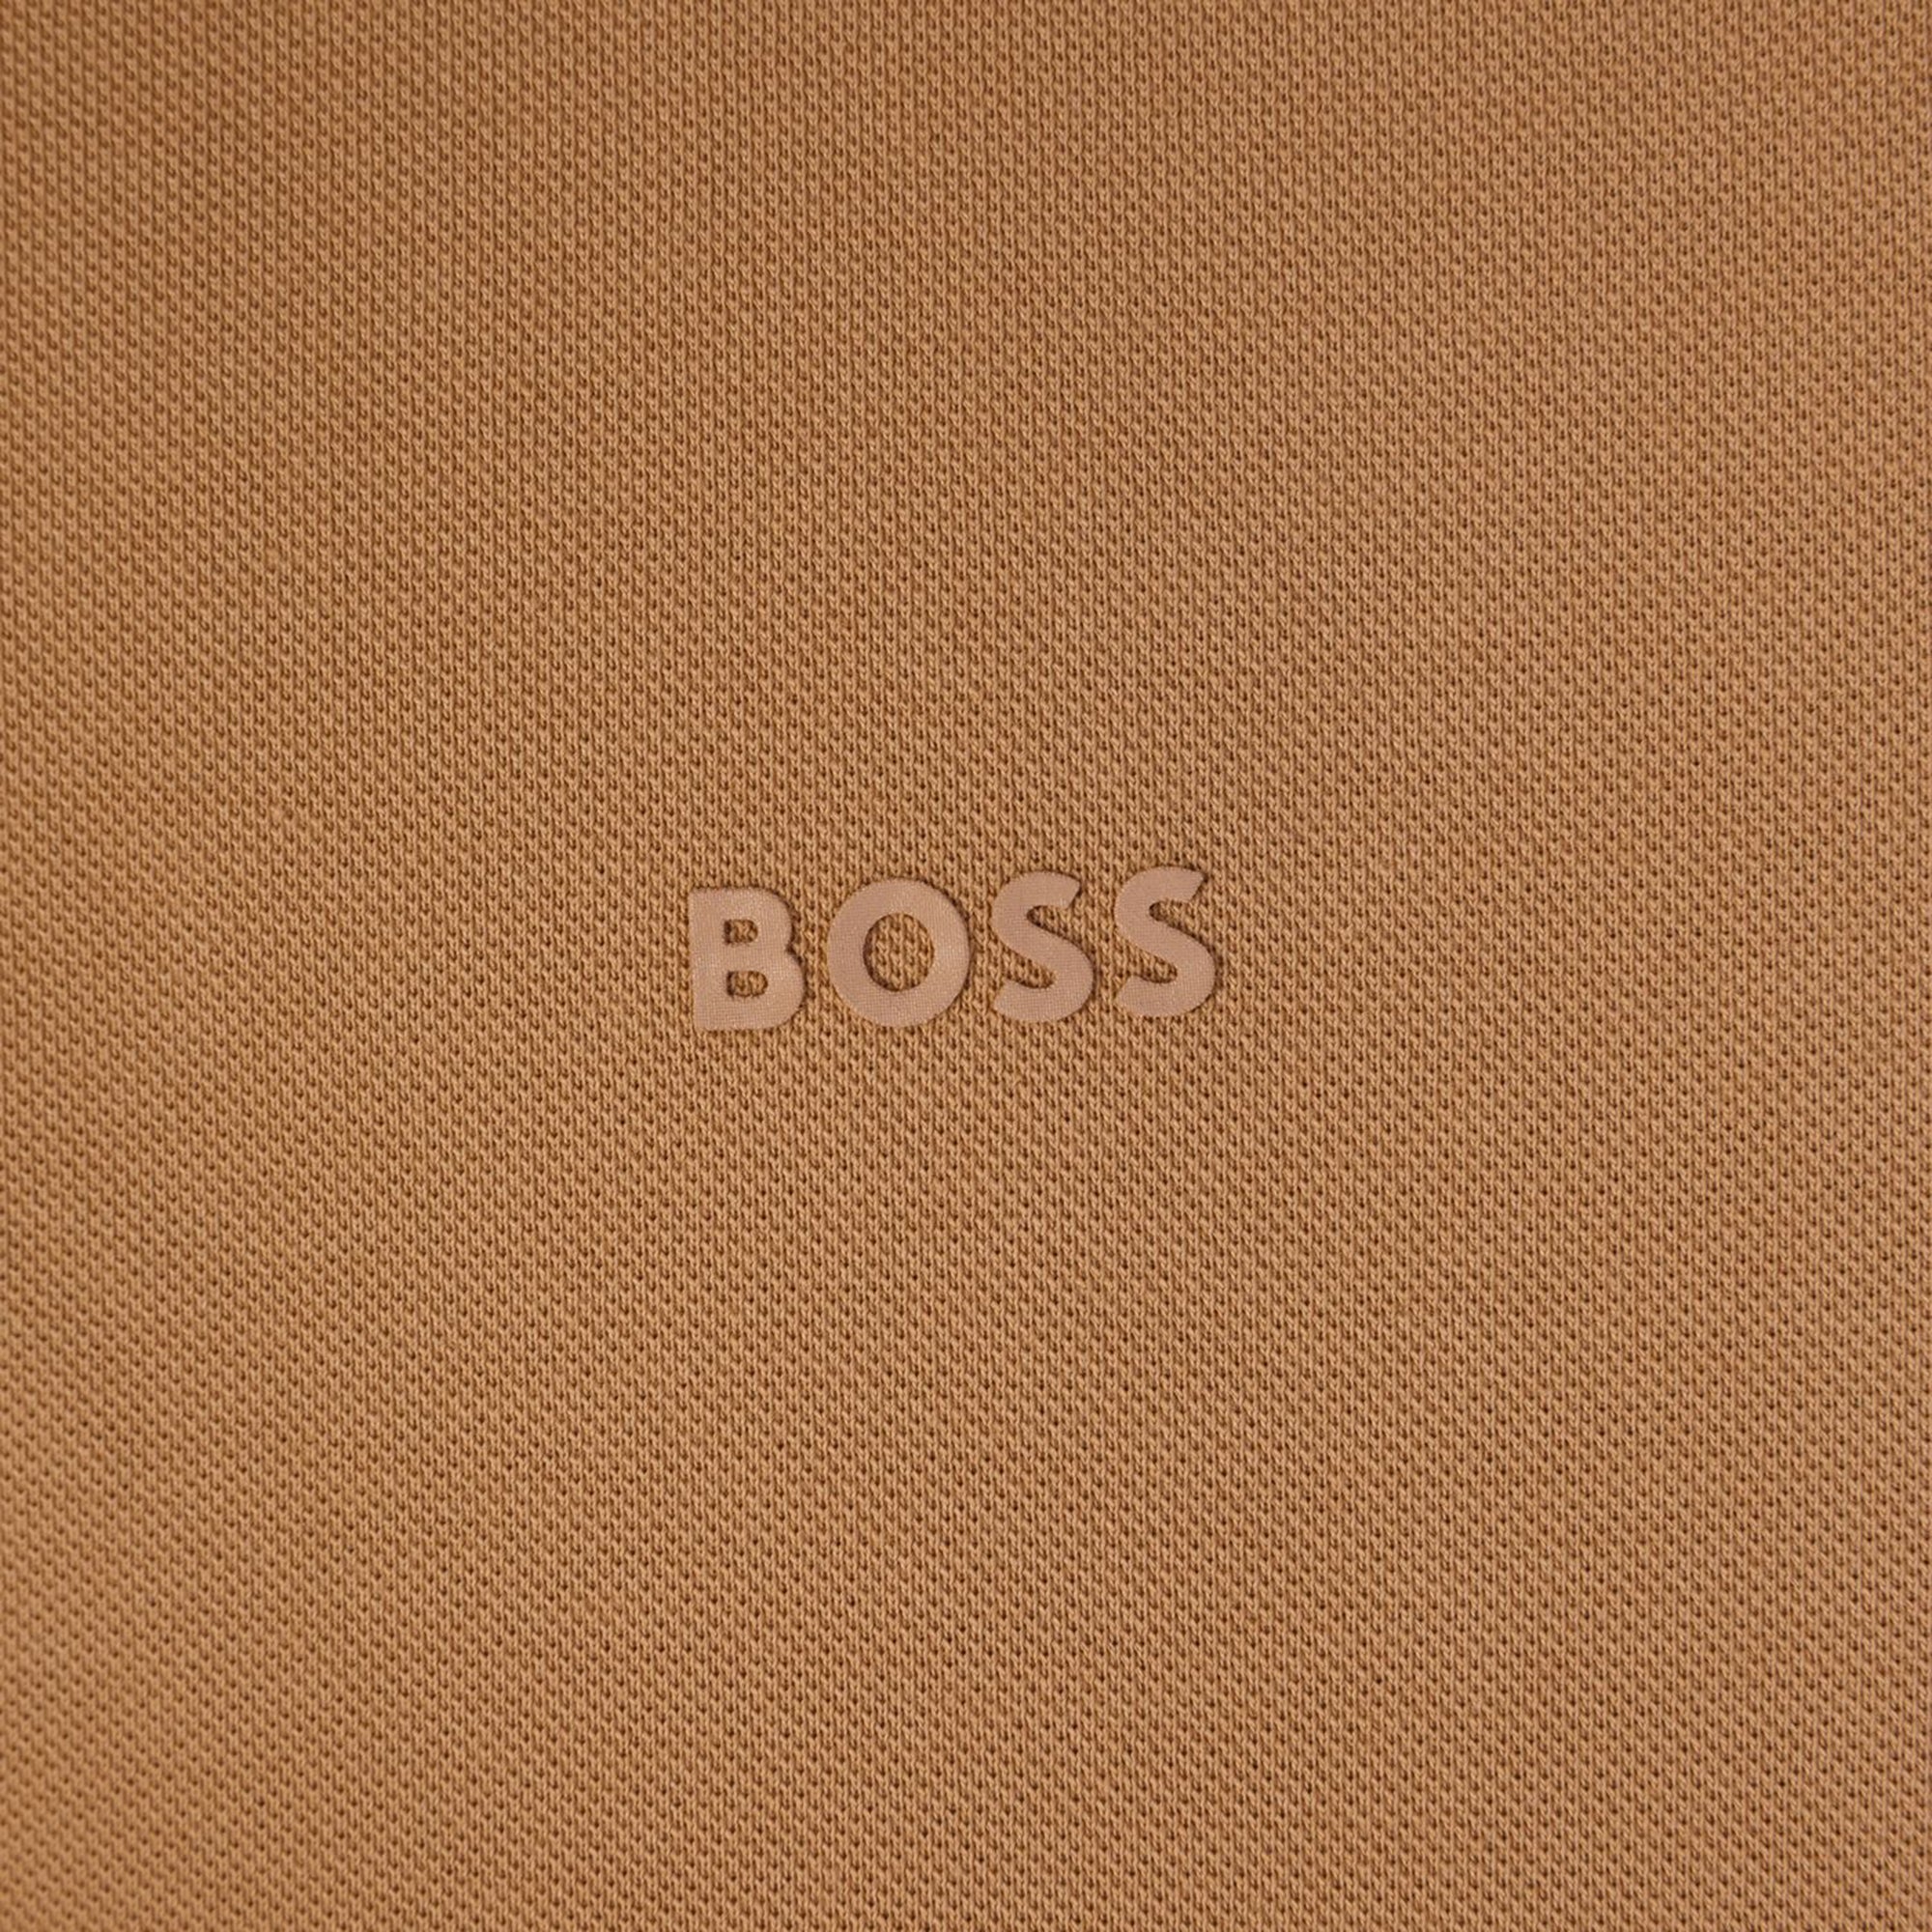 Boss Mens Striped Collar Polo Brown S